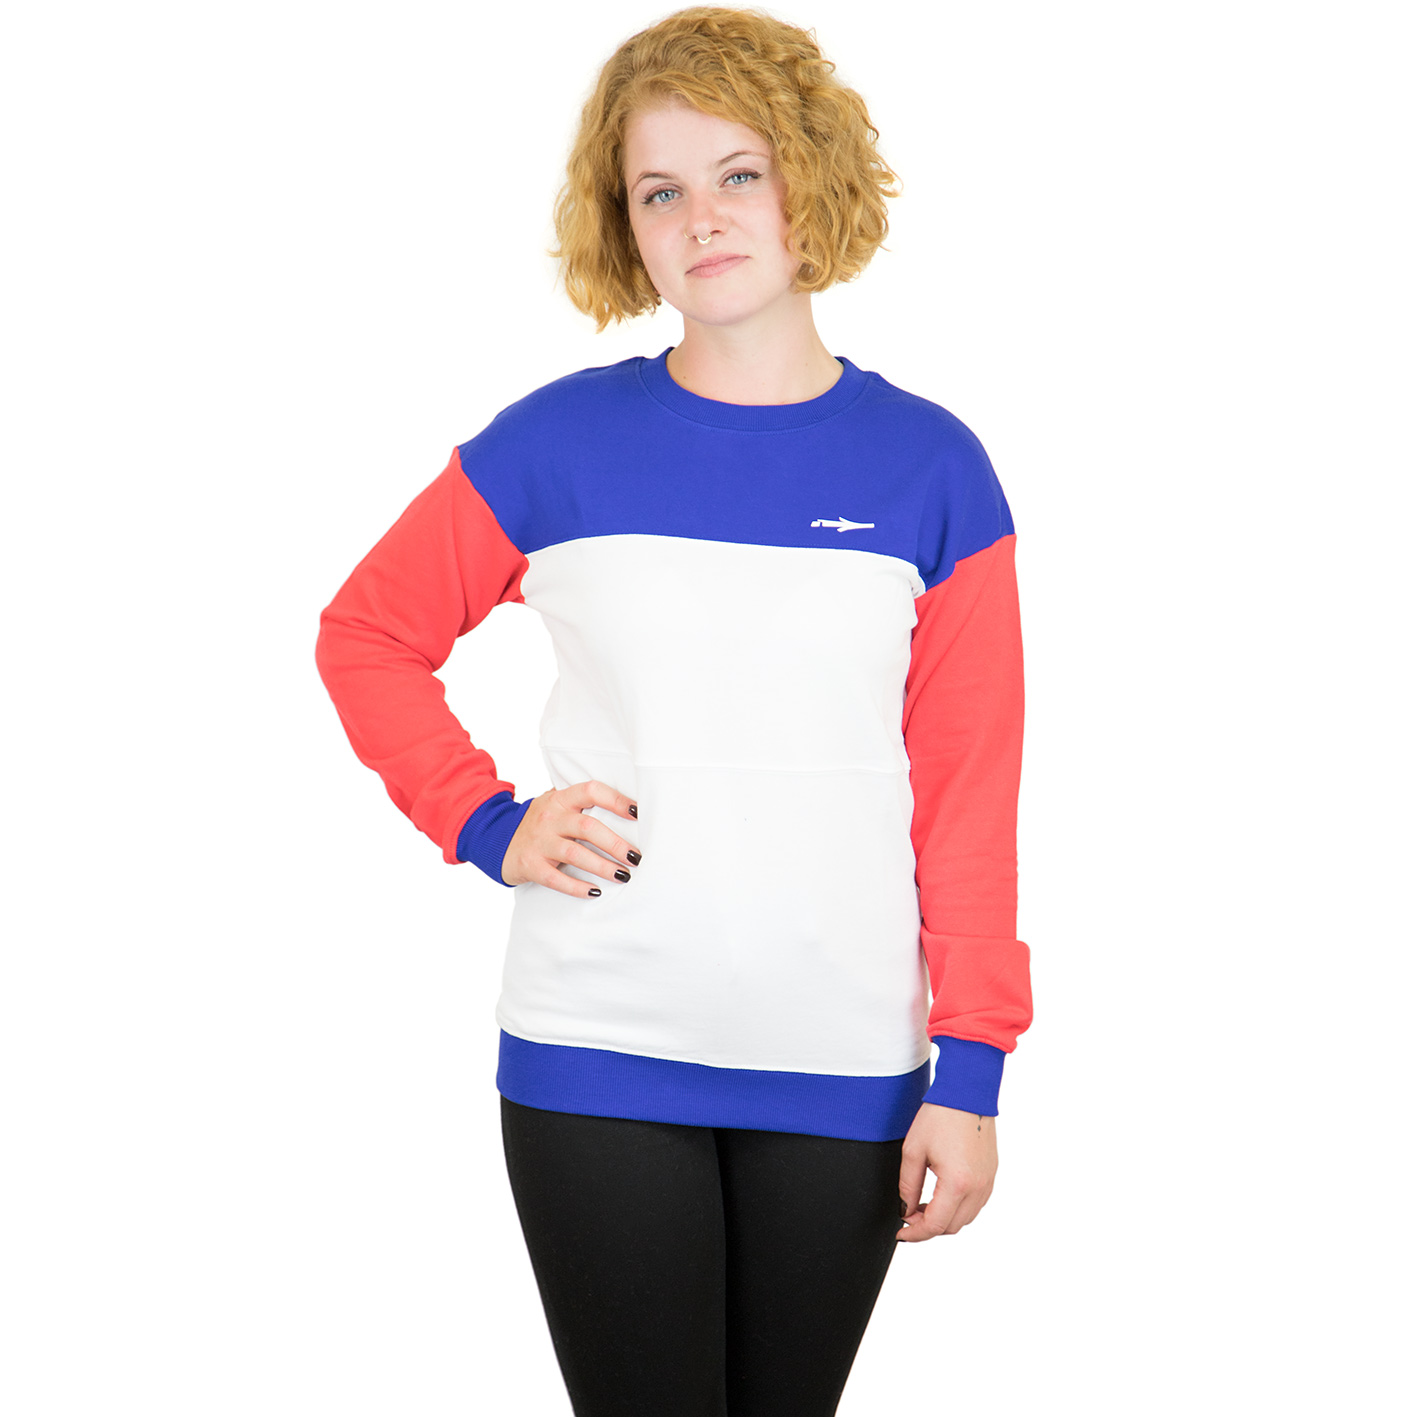 ☆ Illmatic Damen Sweatshirt Tillia Light rot/weiß/blau - hier bestellen!